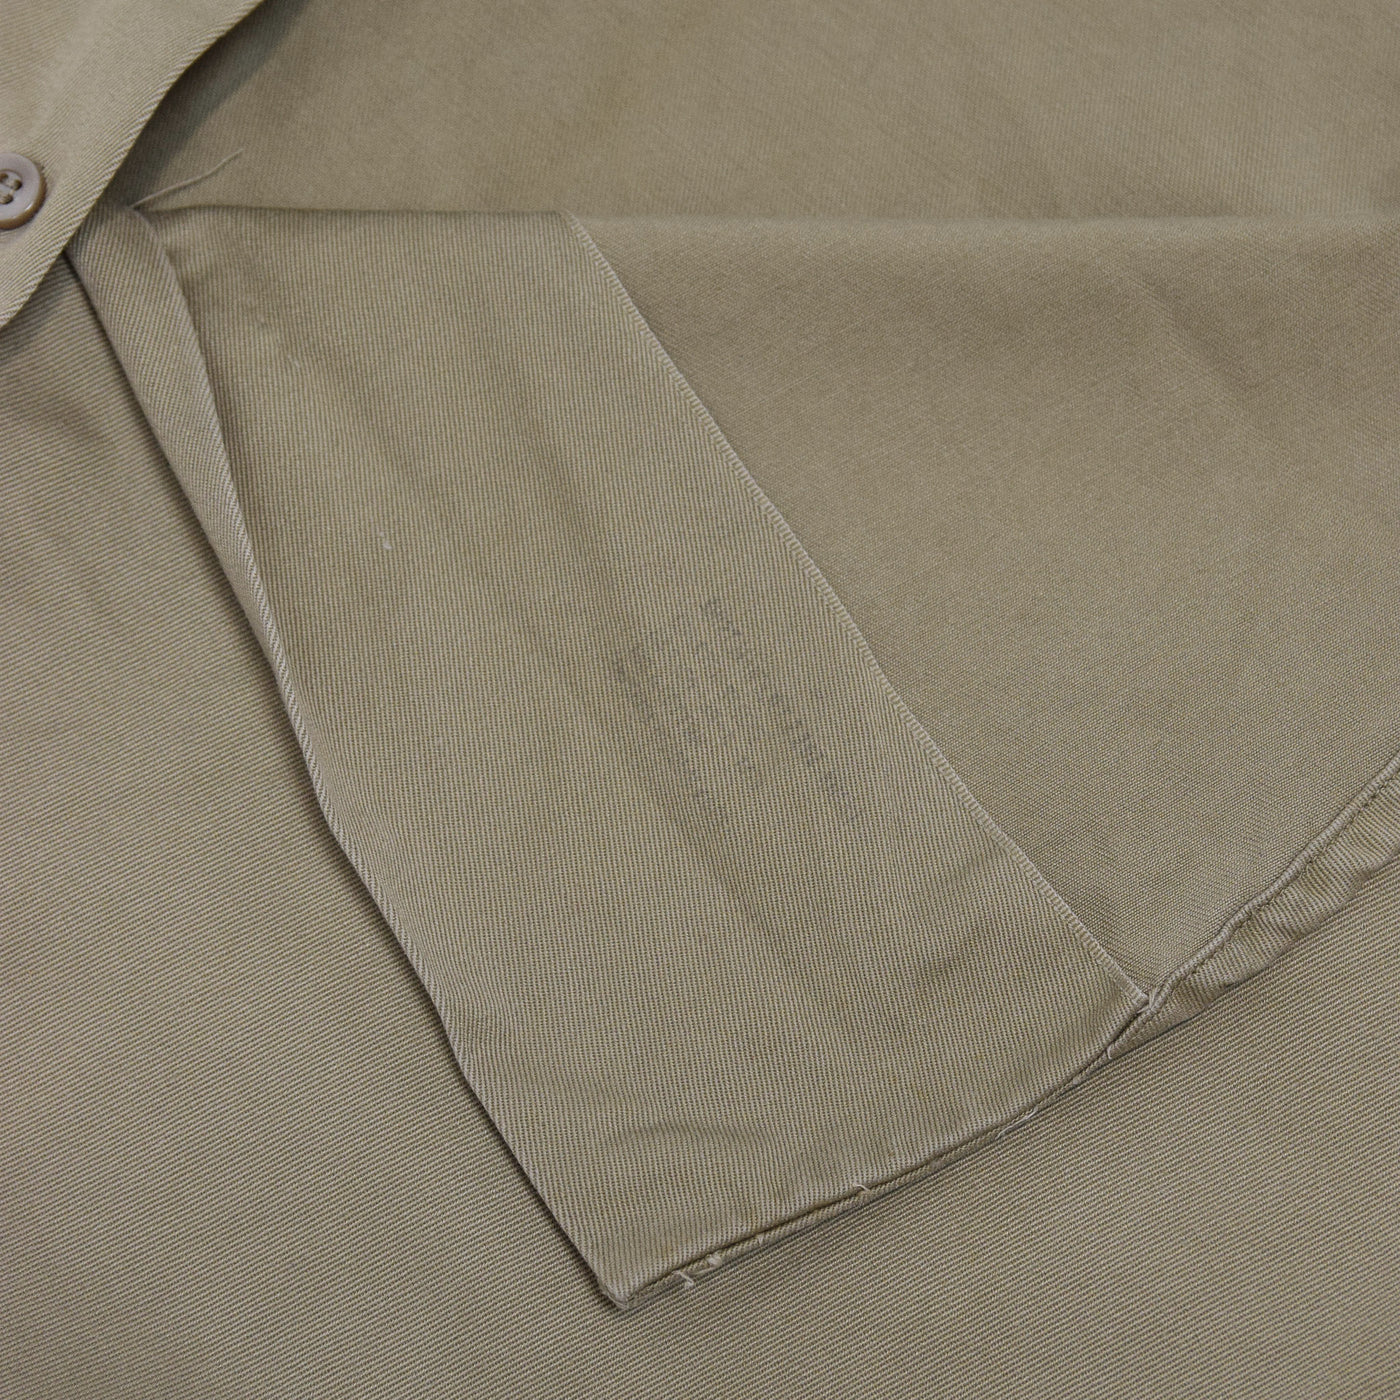 Vintage 70s Vietnam Era US Army Khaki Cotton Twill Military Summer Shirt M internal label